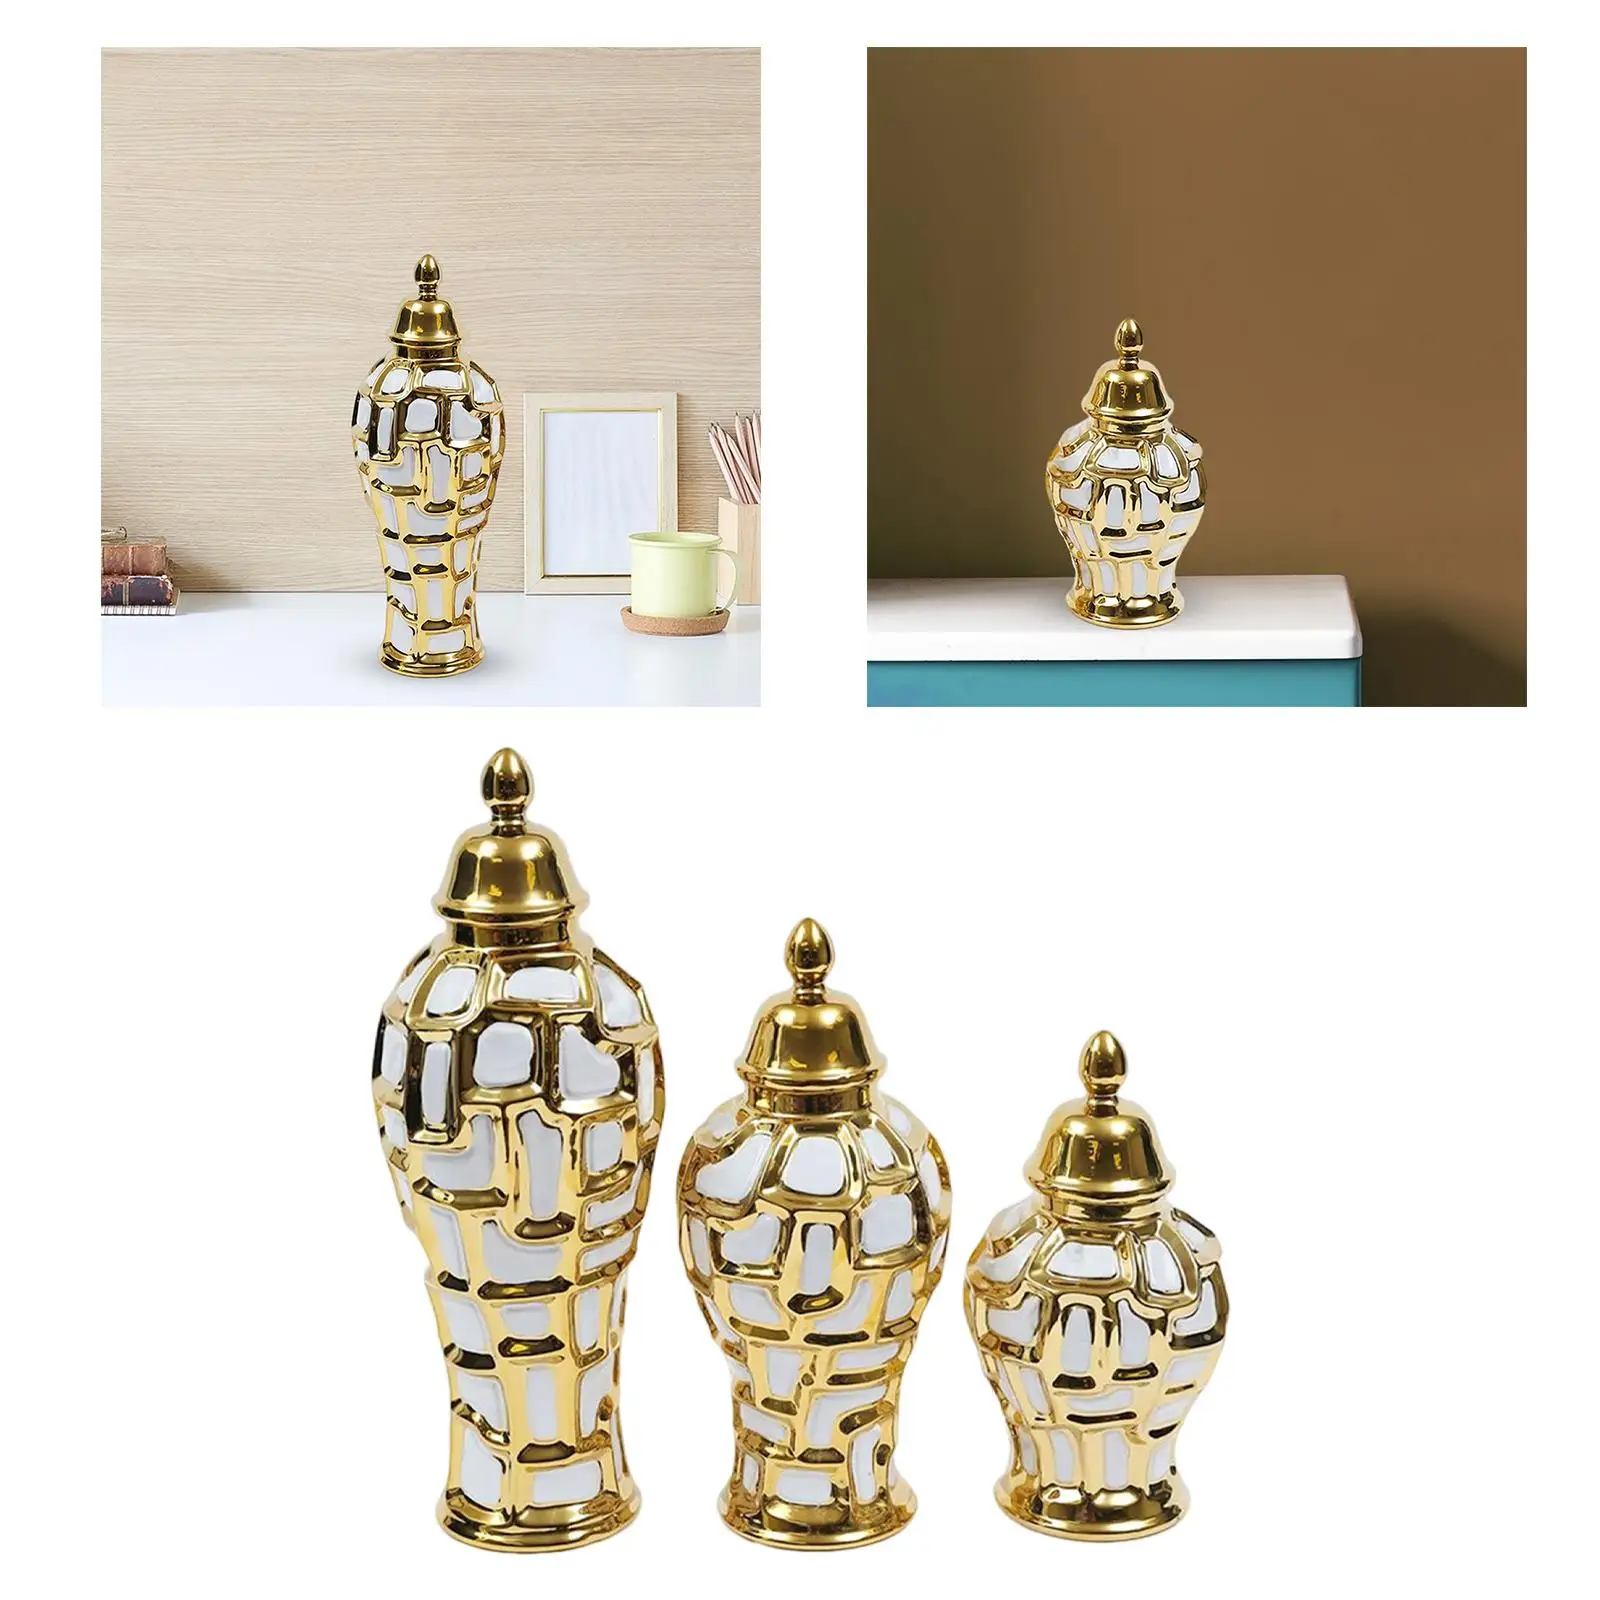 Ceramic General Jar Temple Collection Decorative Vase Home Decor Office Desk